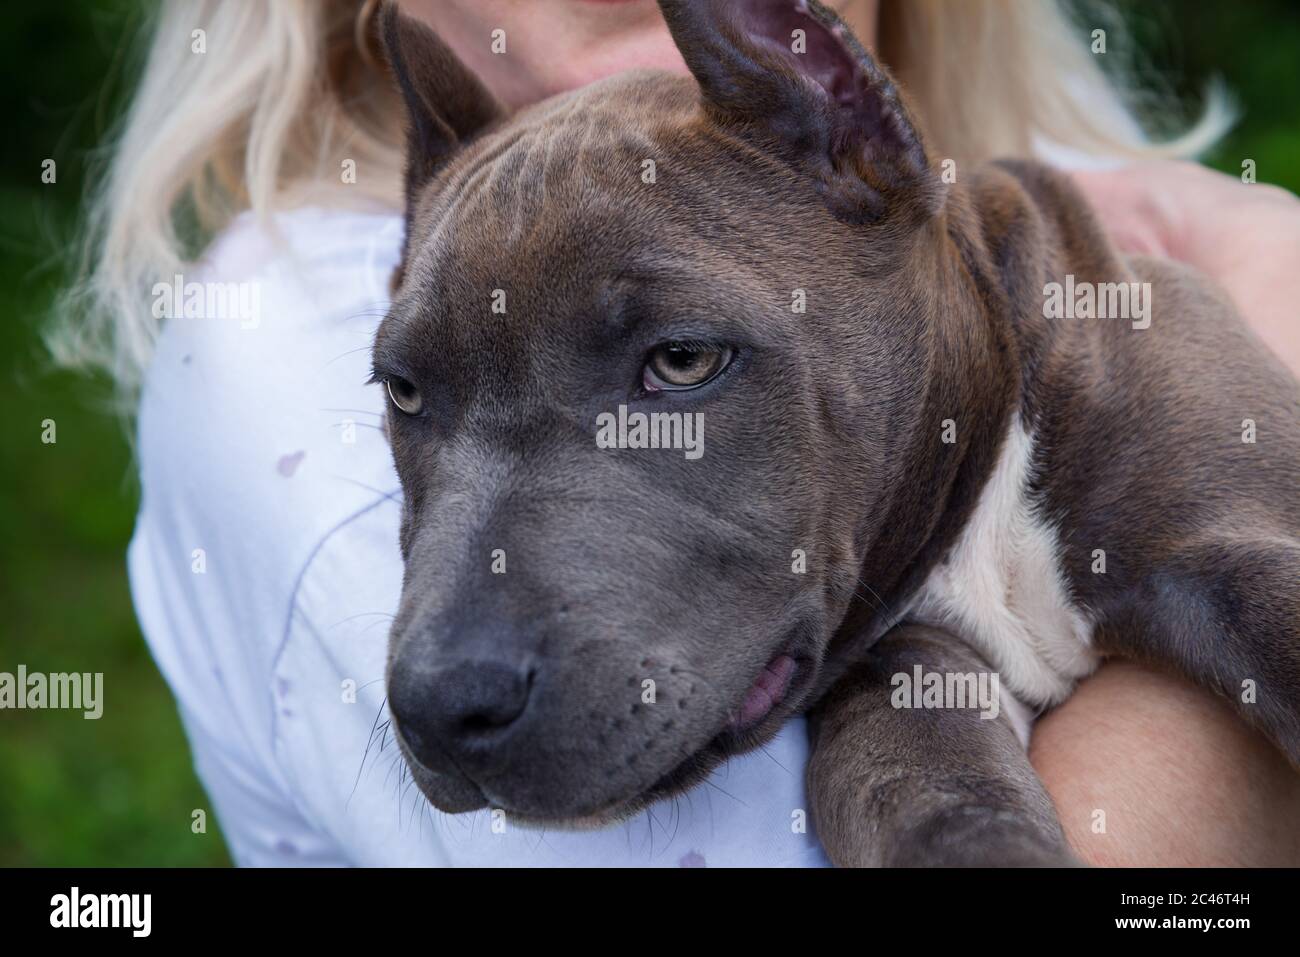 La rubia sostiene en sus brazos un cachorro del americano Staffordshire Terrier Foto de stock